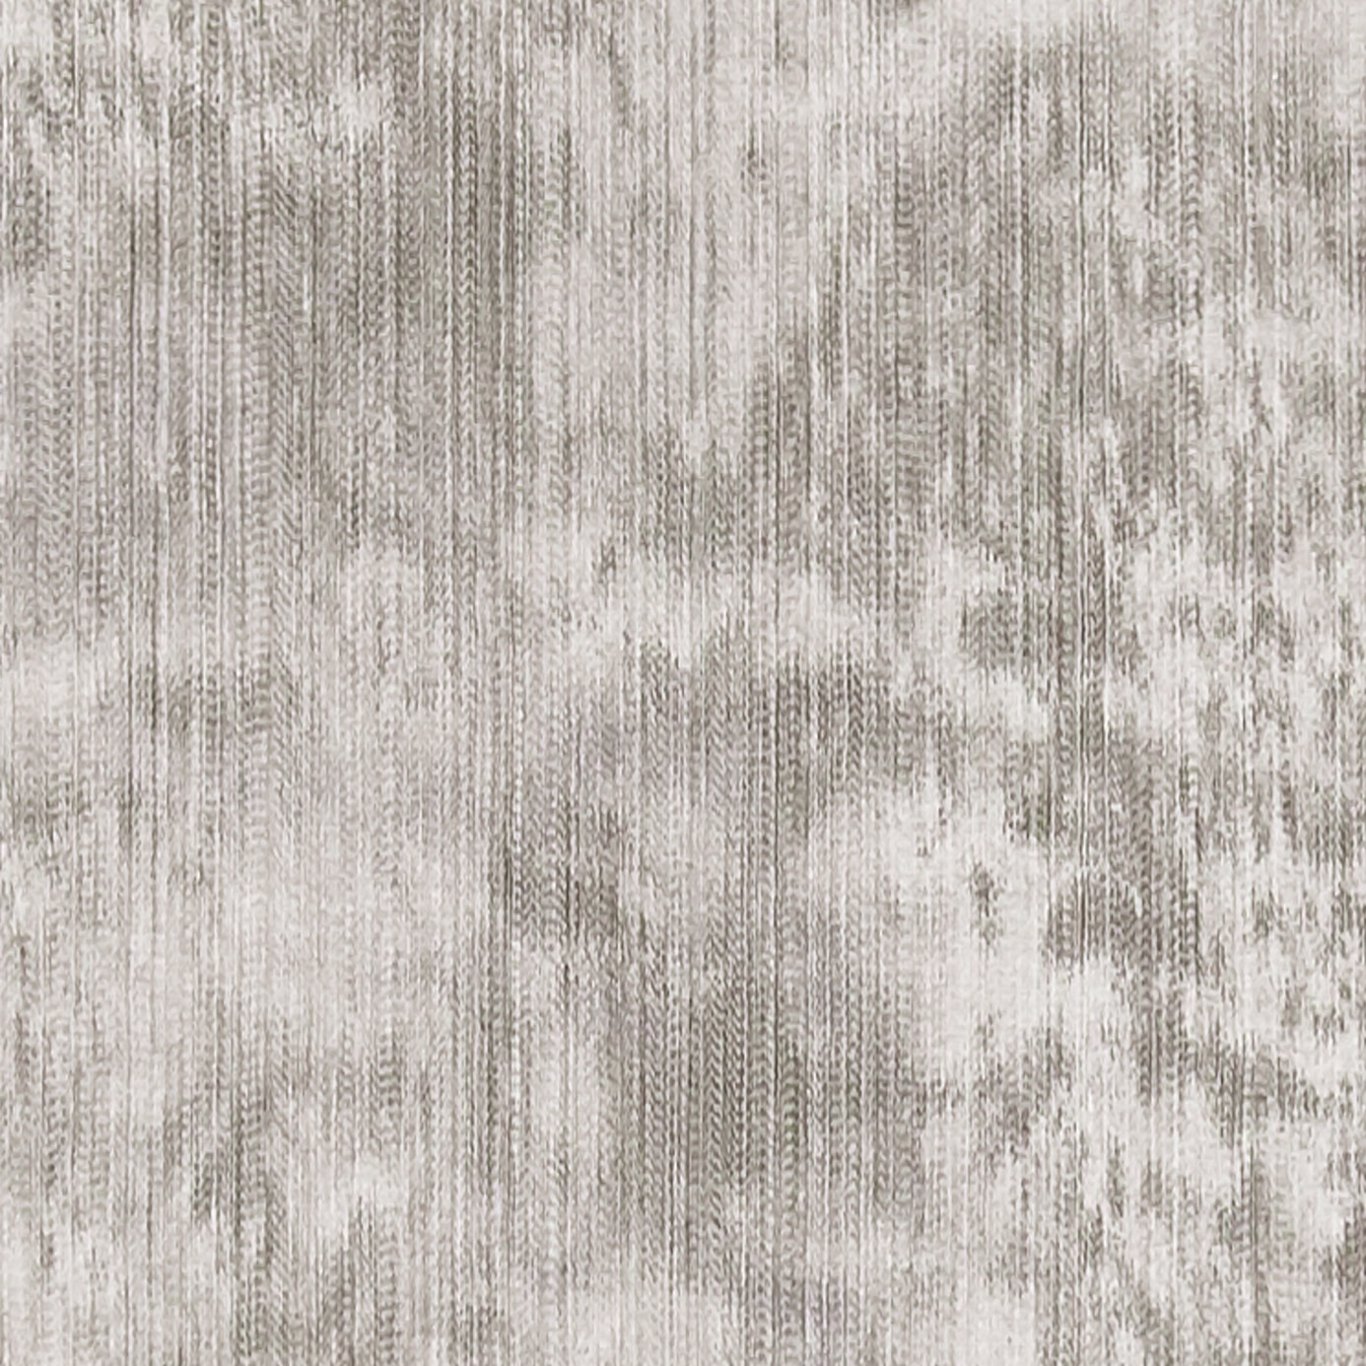 Haze Mocha Fabric by CNC